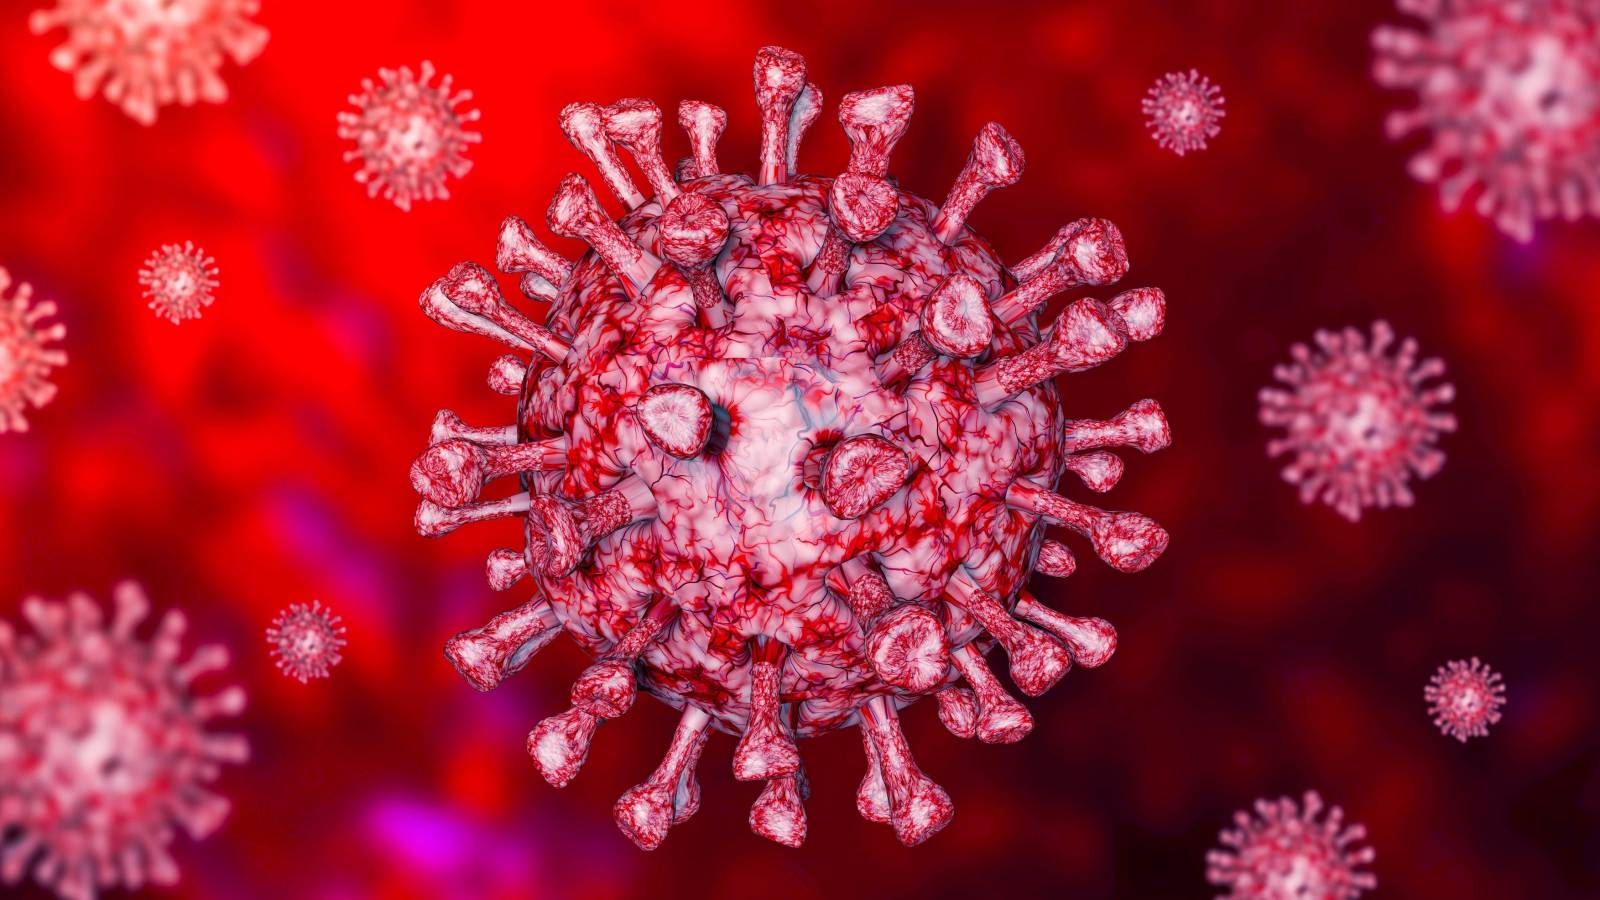 Coronavirus simptome luni vindecare